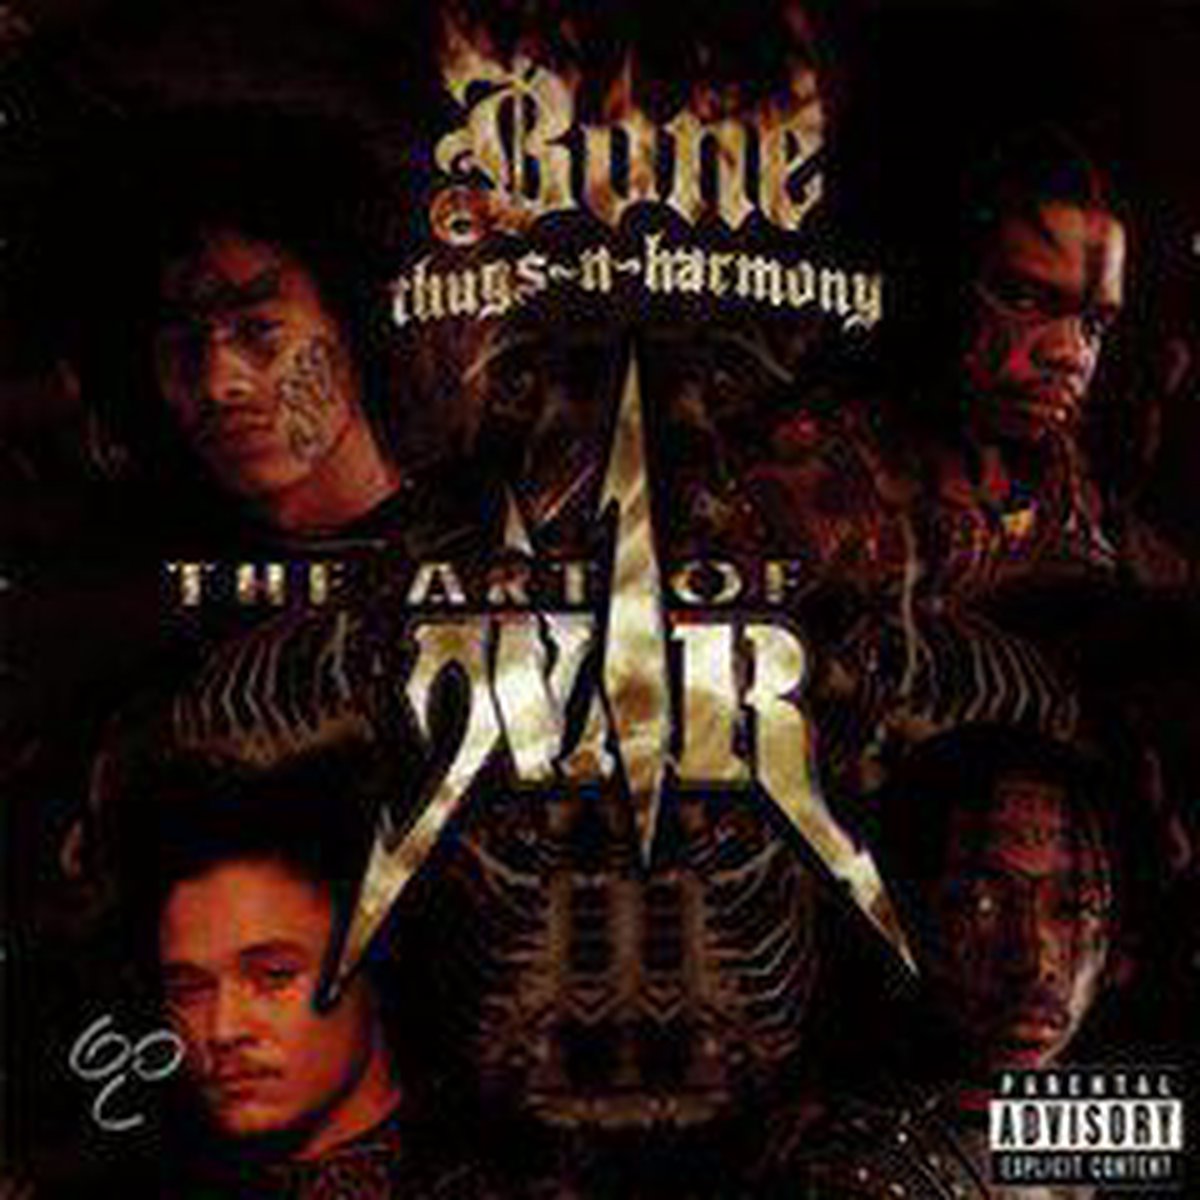 The Art Of War, Bone ThugsNHarmony CD (album